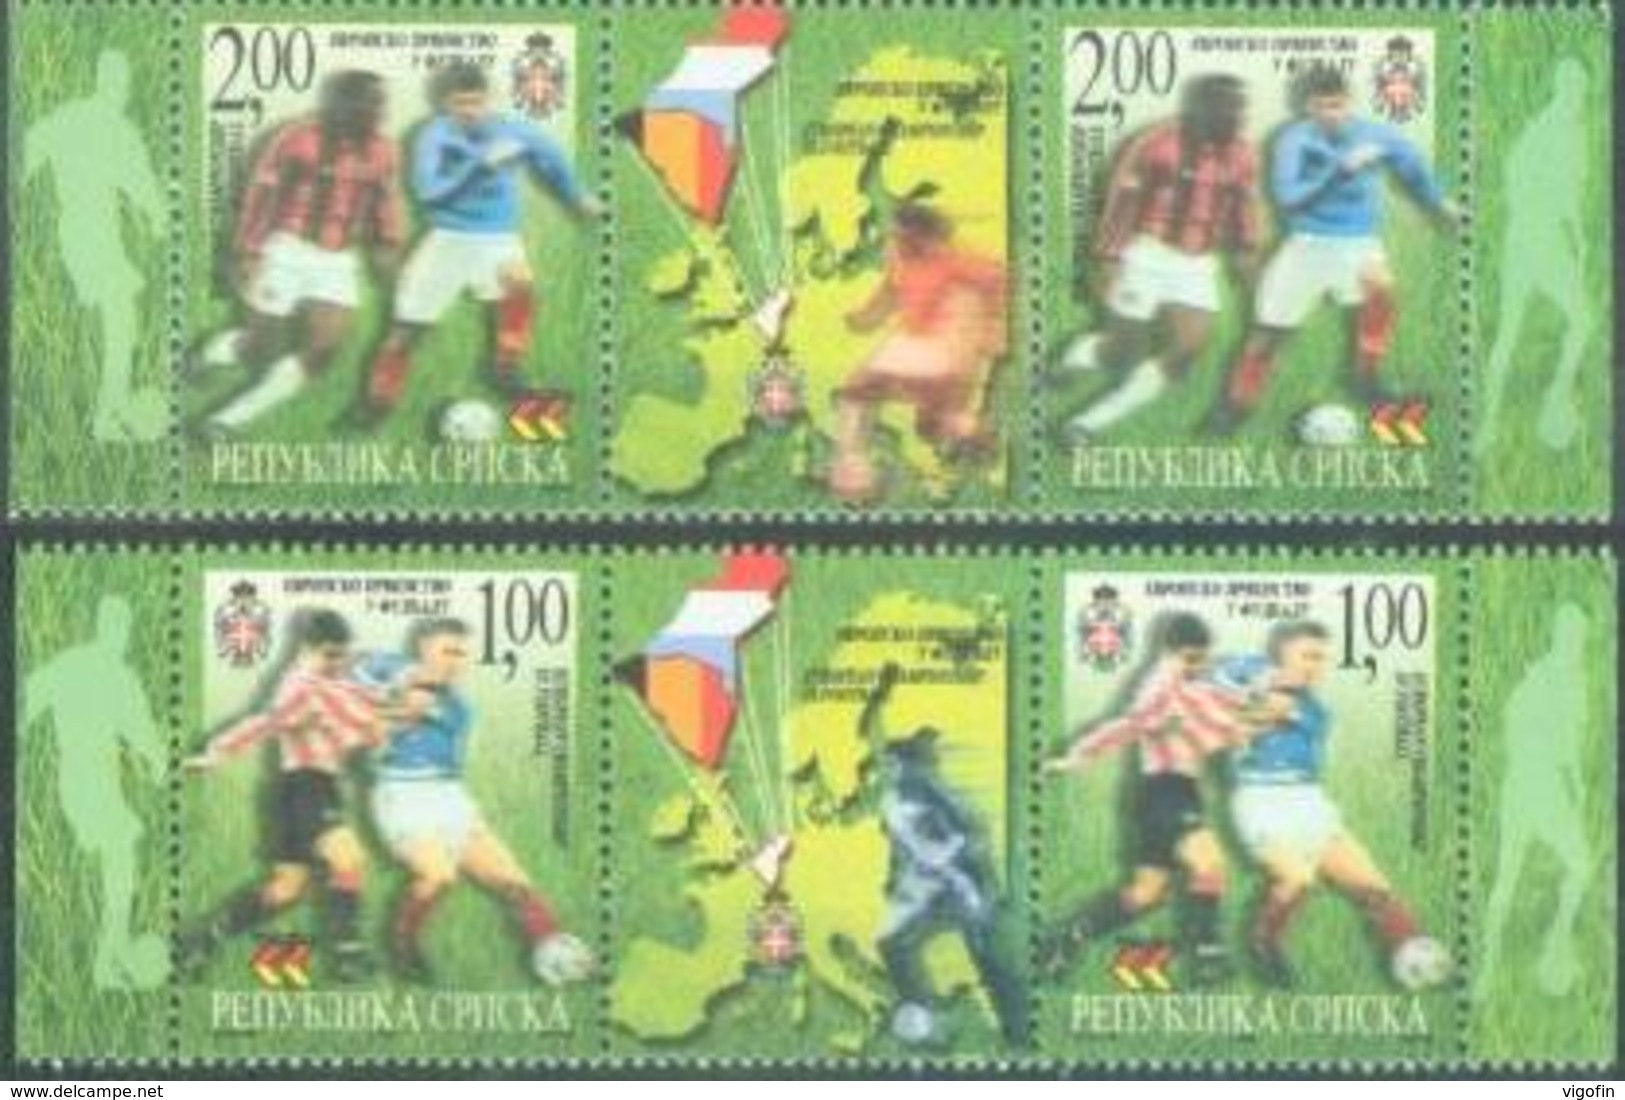 BHRS 2000-170-1 EU CUP FOOTBALL, BOSNA AND HERZEGOVINA-R.SRPSKA, 2 X 2v + Labels, MNH - Bosnien-Herzegowina